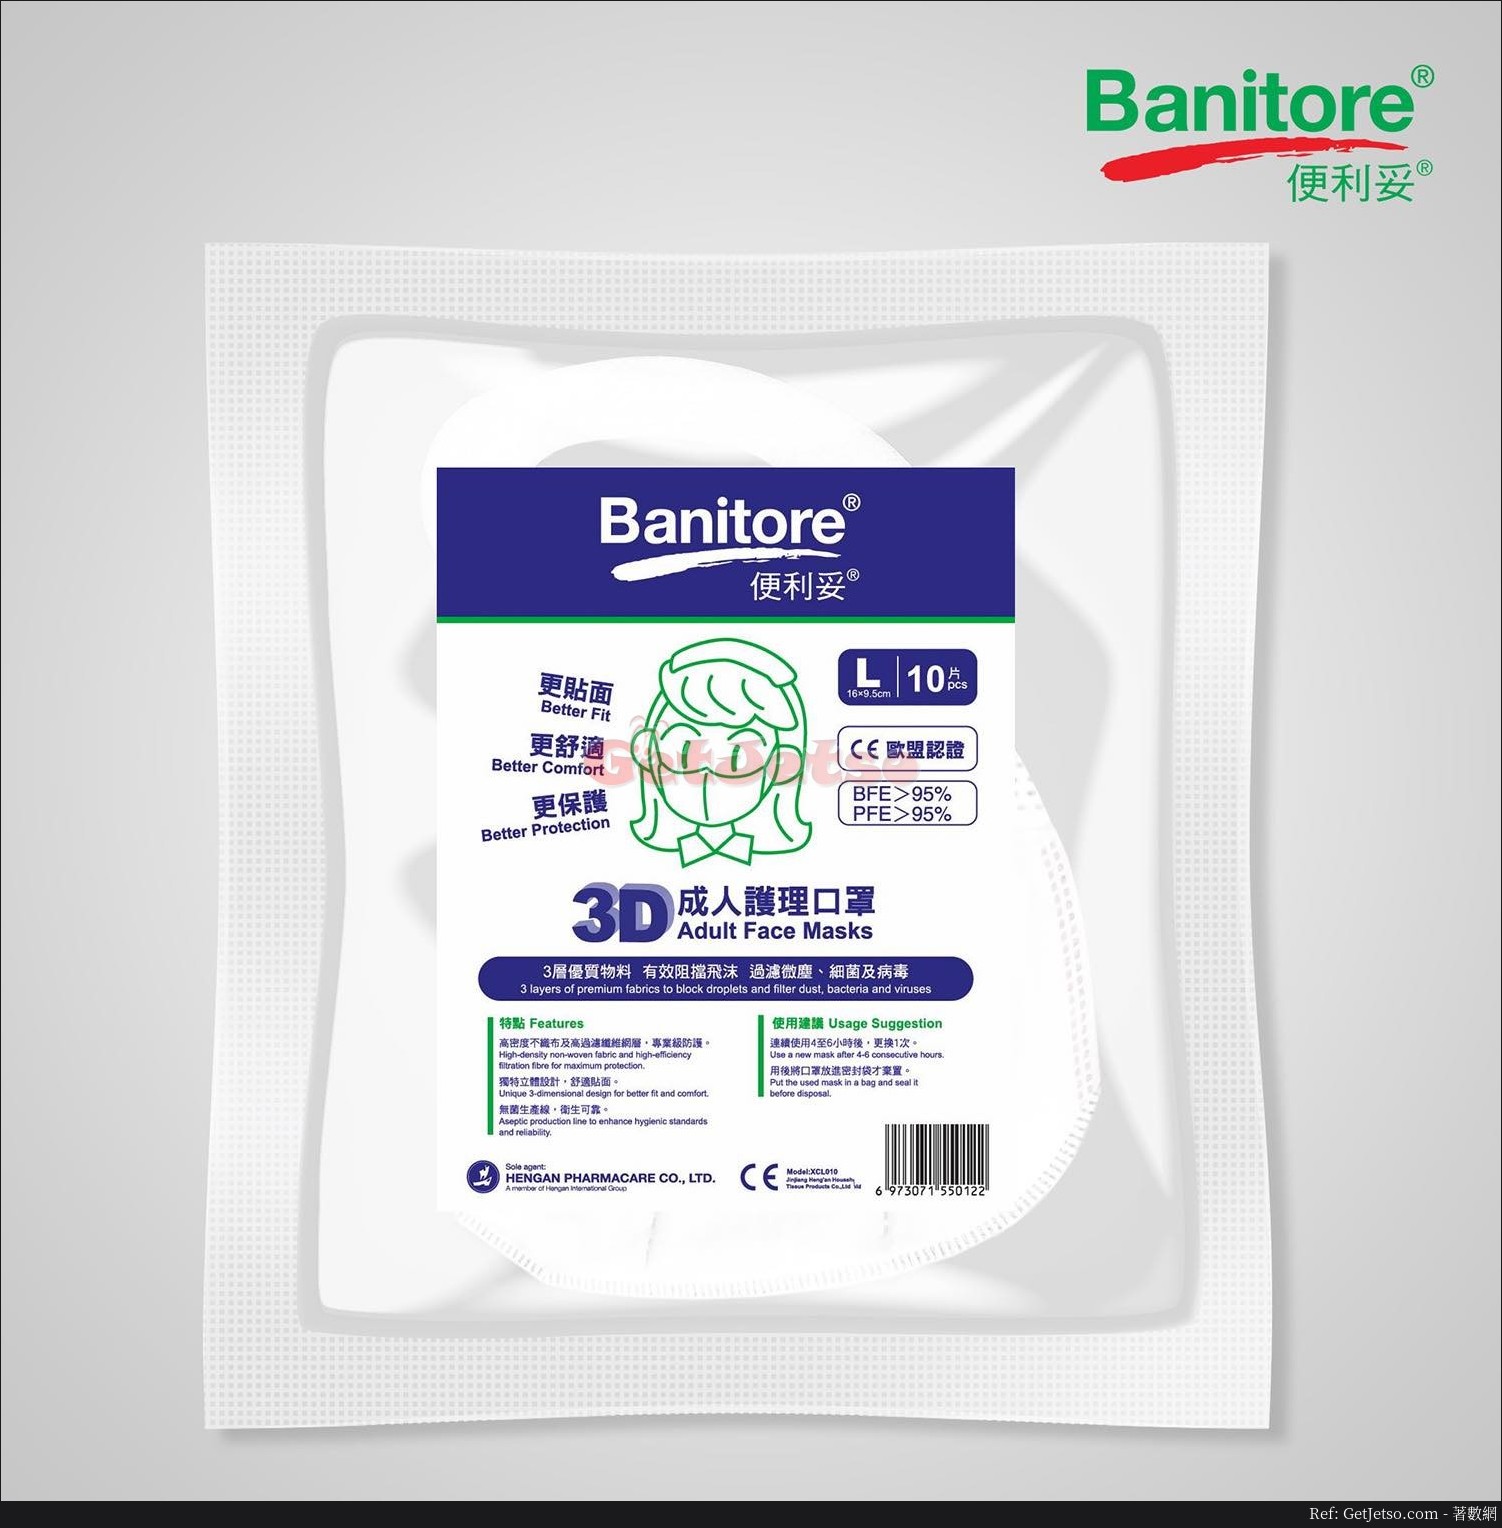 Banitore 便利妥4月12日3D 口罩全線TASTE發售圖片1